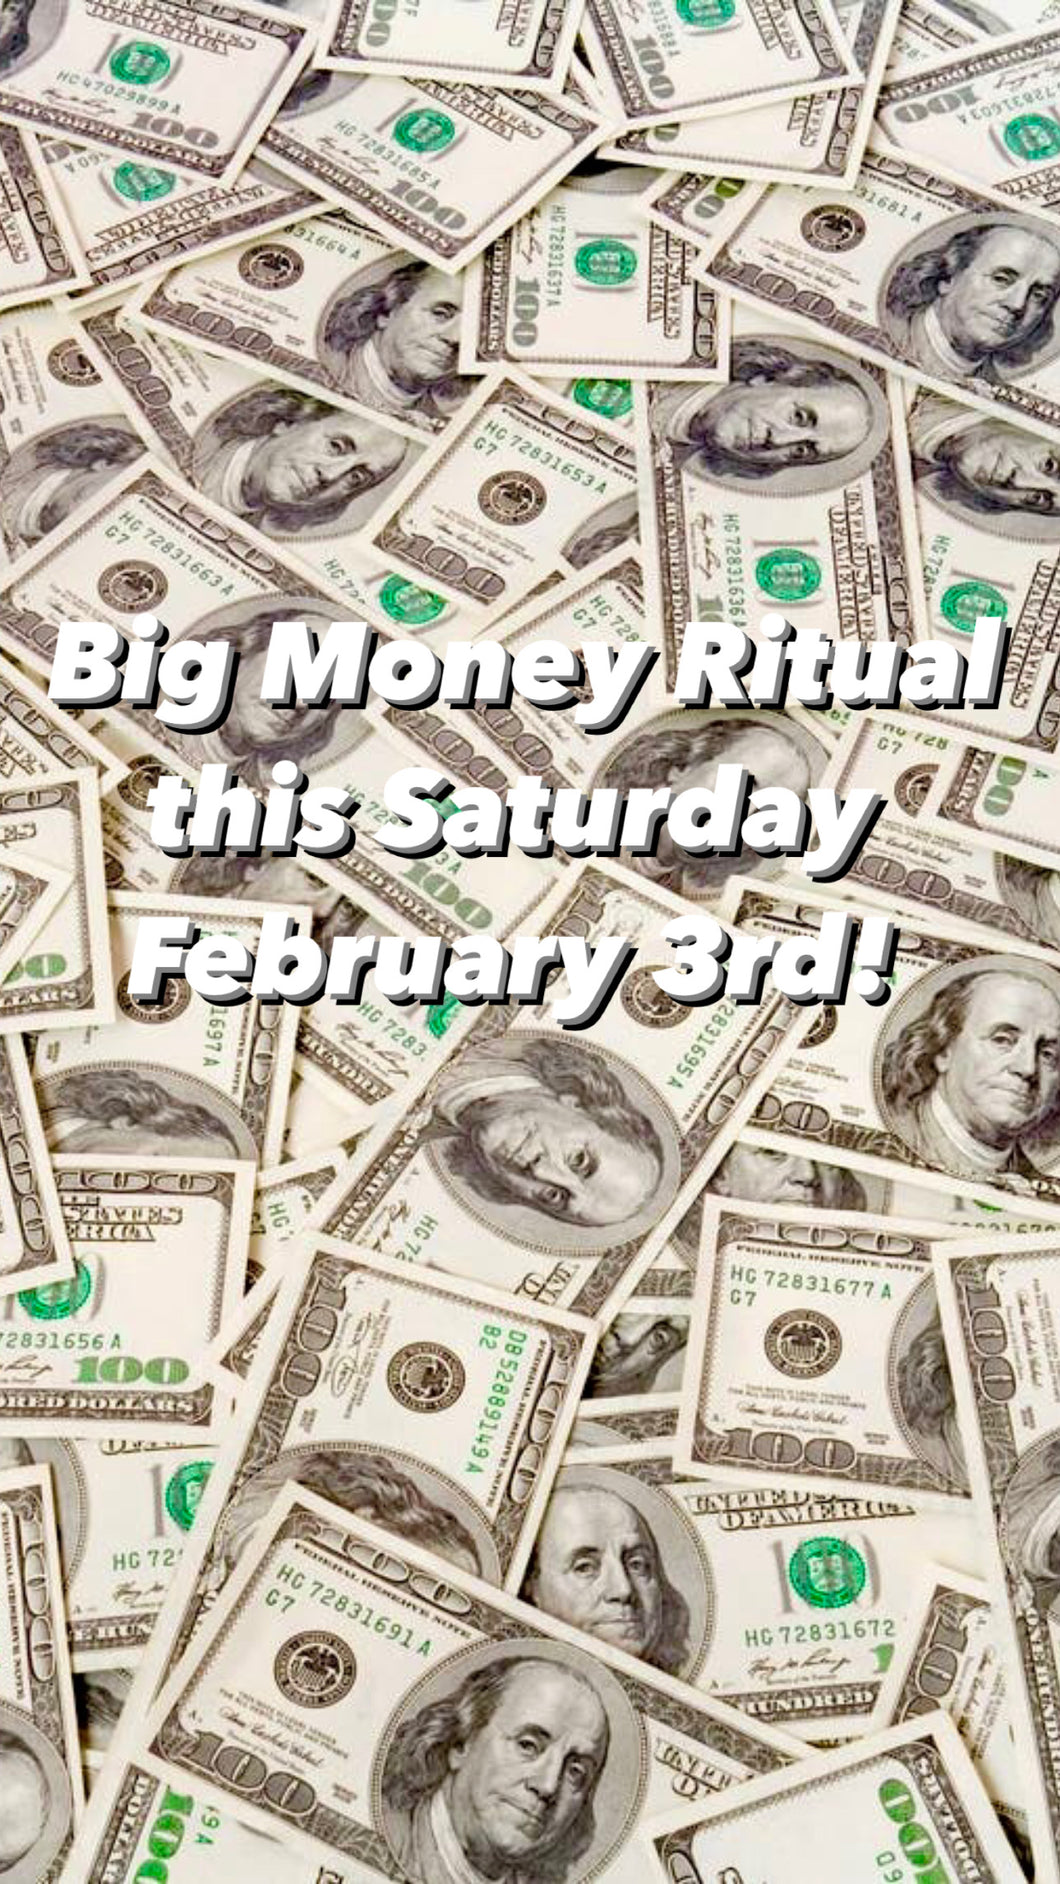 Big Money Ritual 2-3-24